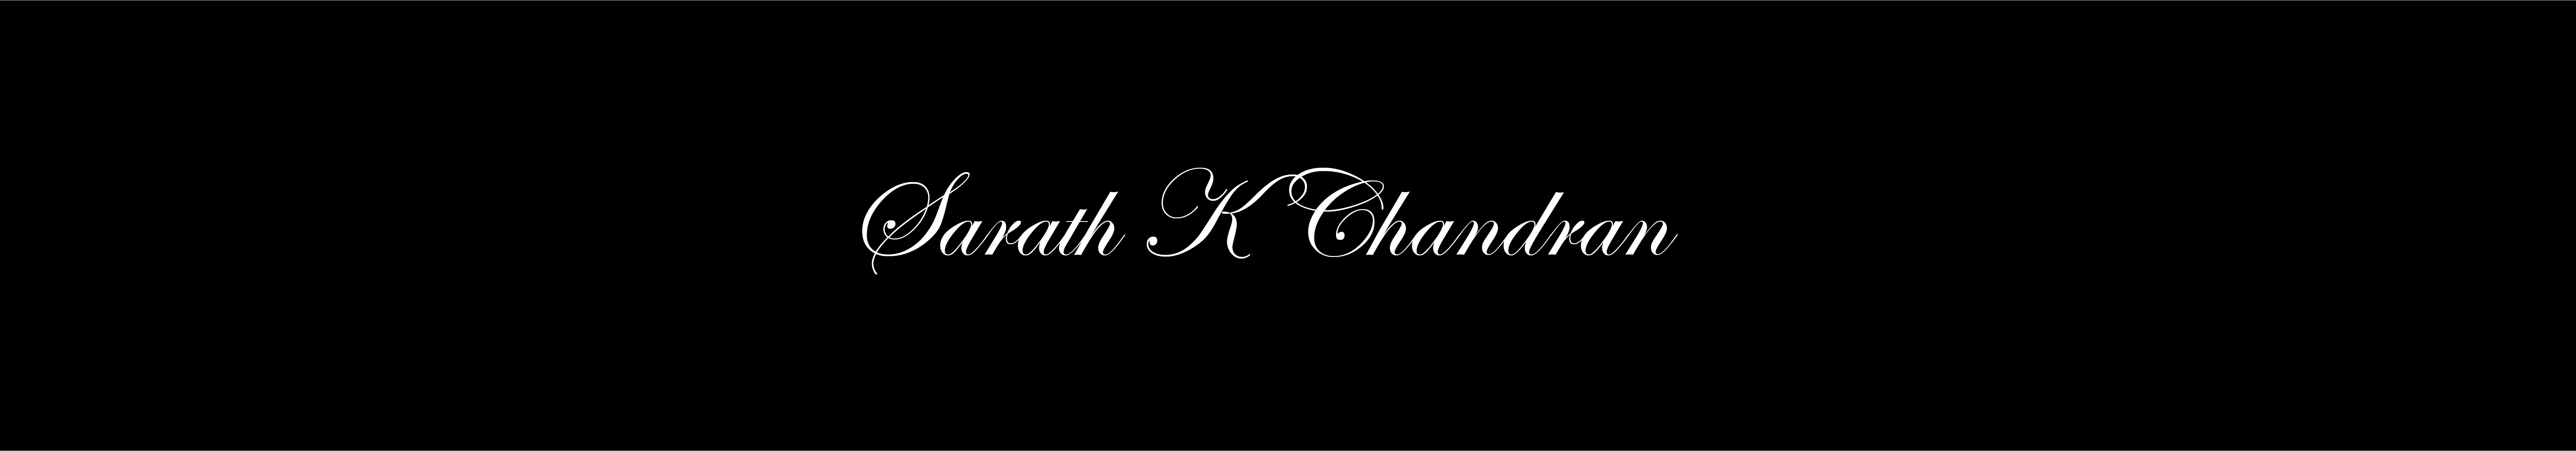 Sarath K Chandran's profile banner